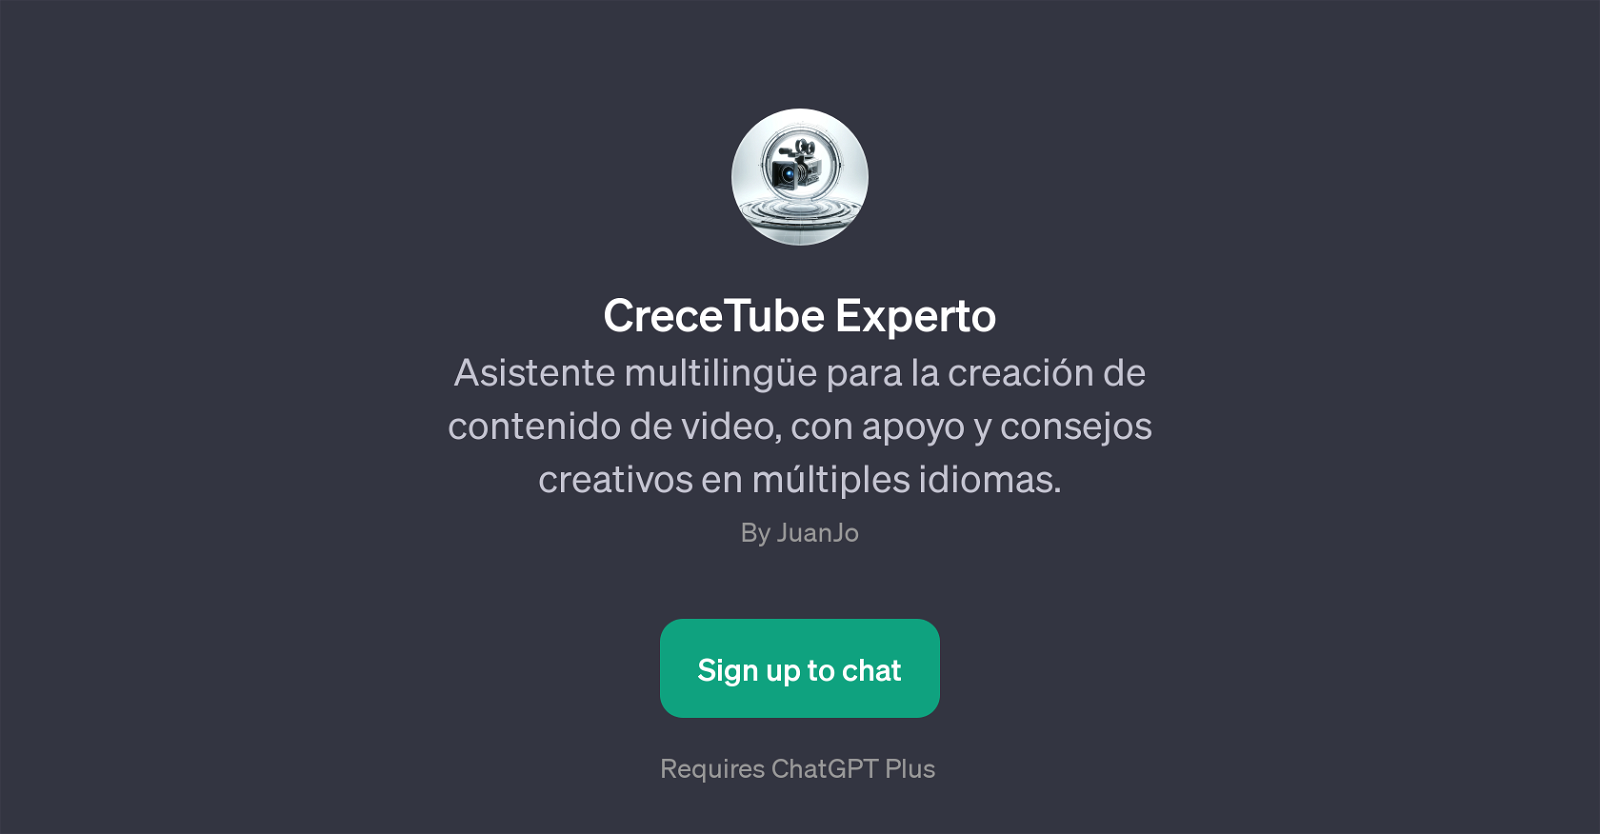 CreceTube Experto website